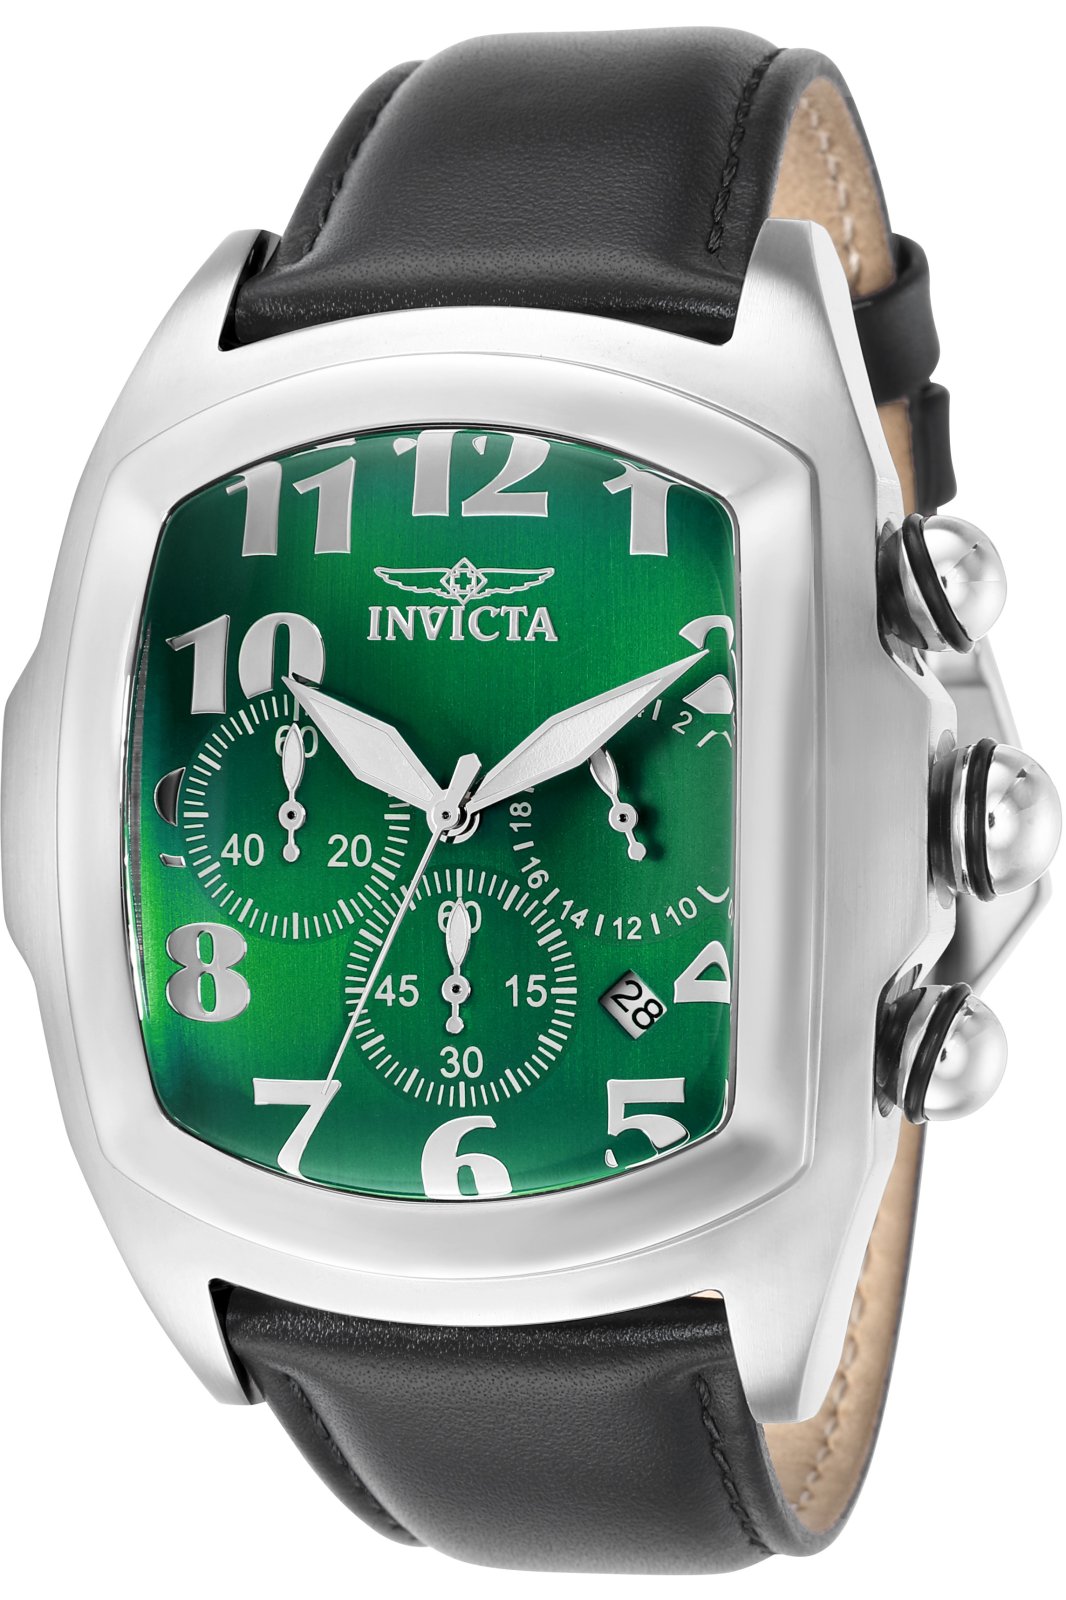 Invicta Lupah 36118 Men's Quartz Watch - 47mm